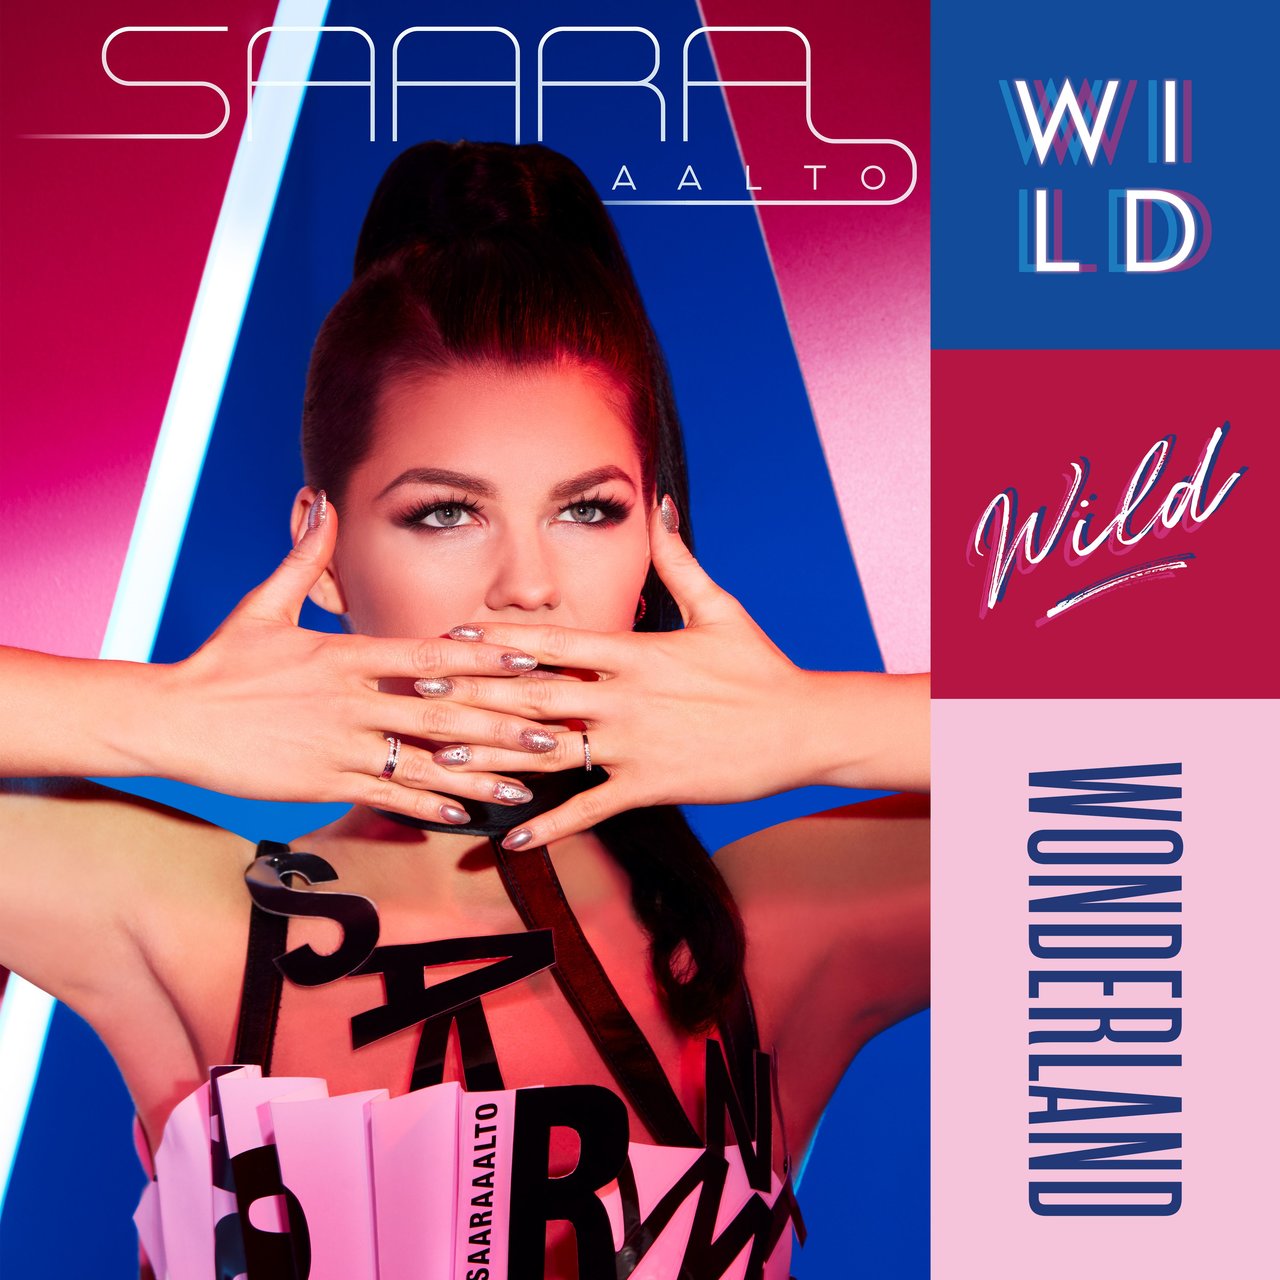 Saara Aalto Wild Wild Wonderland cover artwork